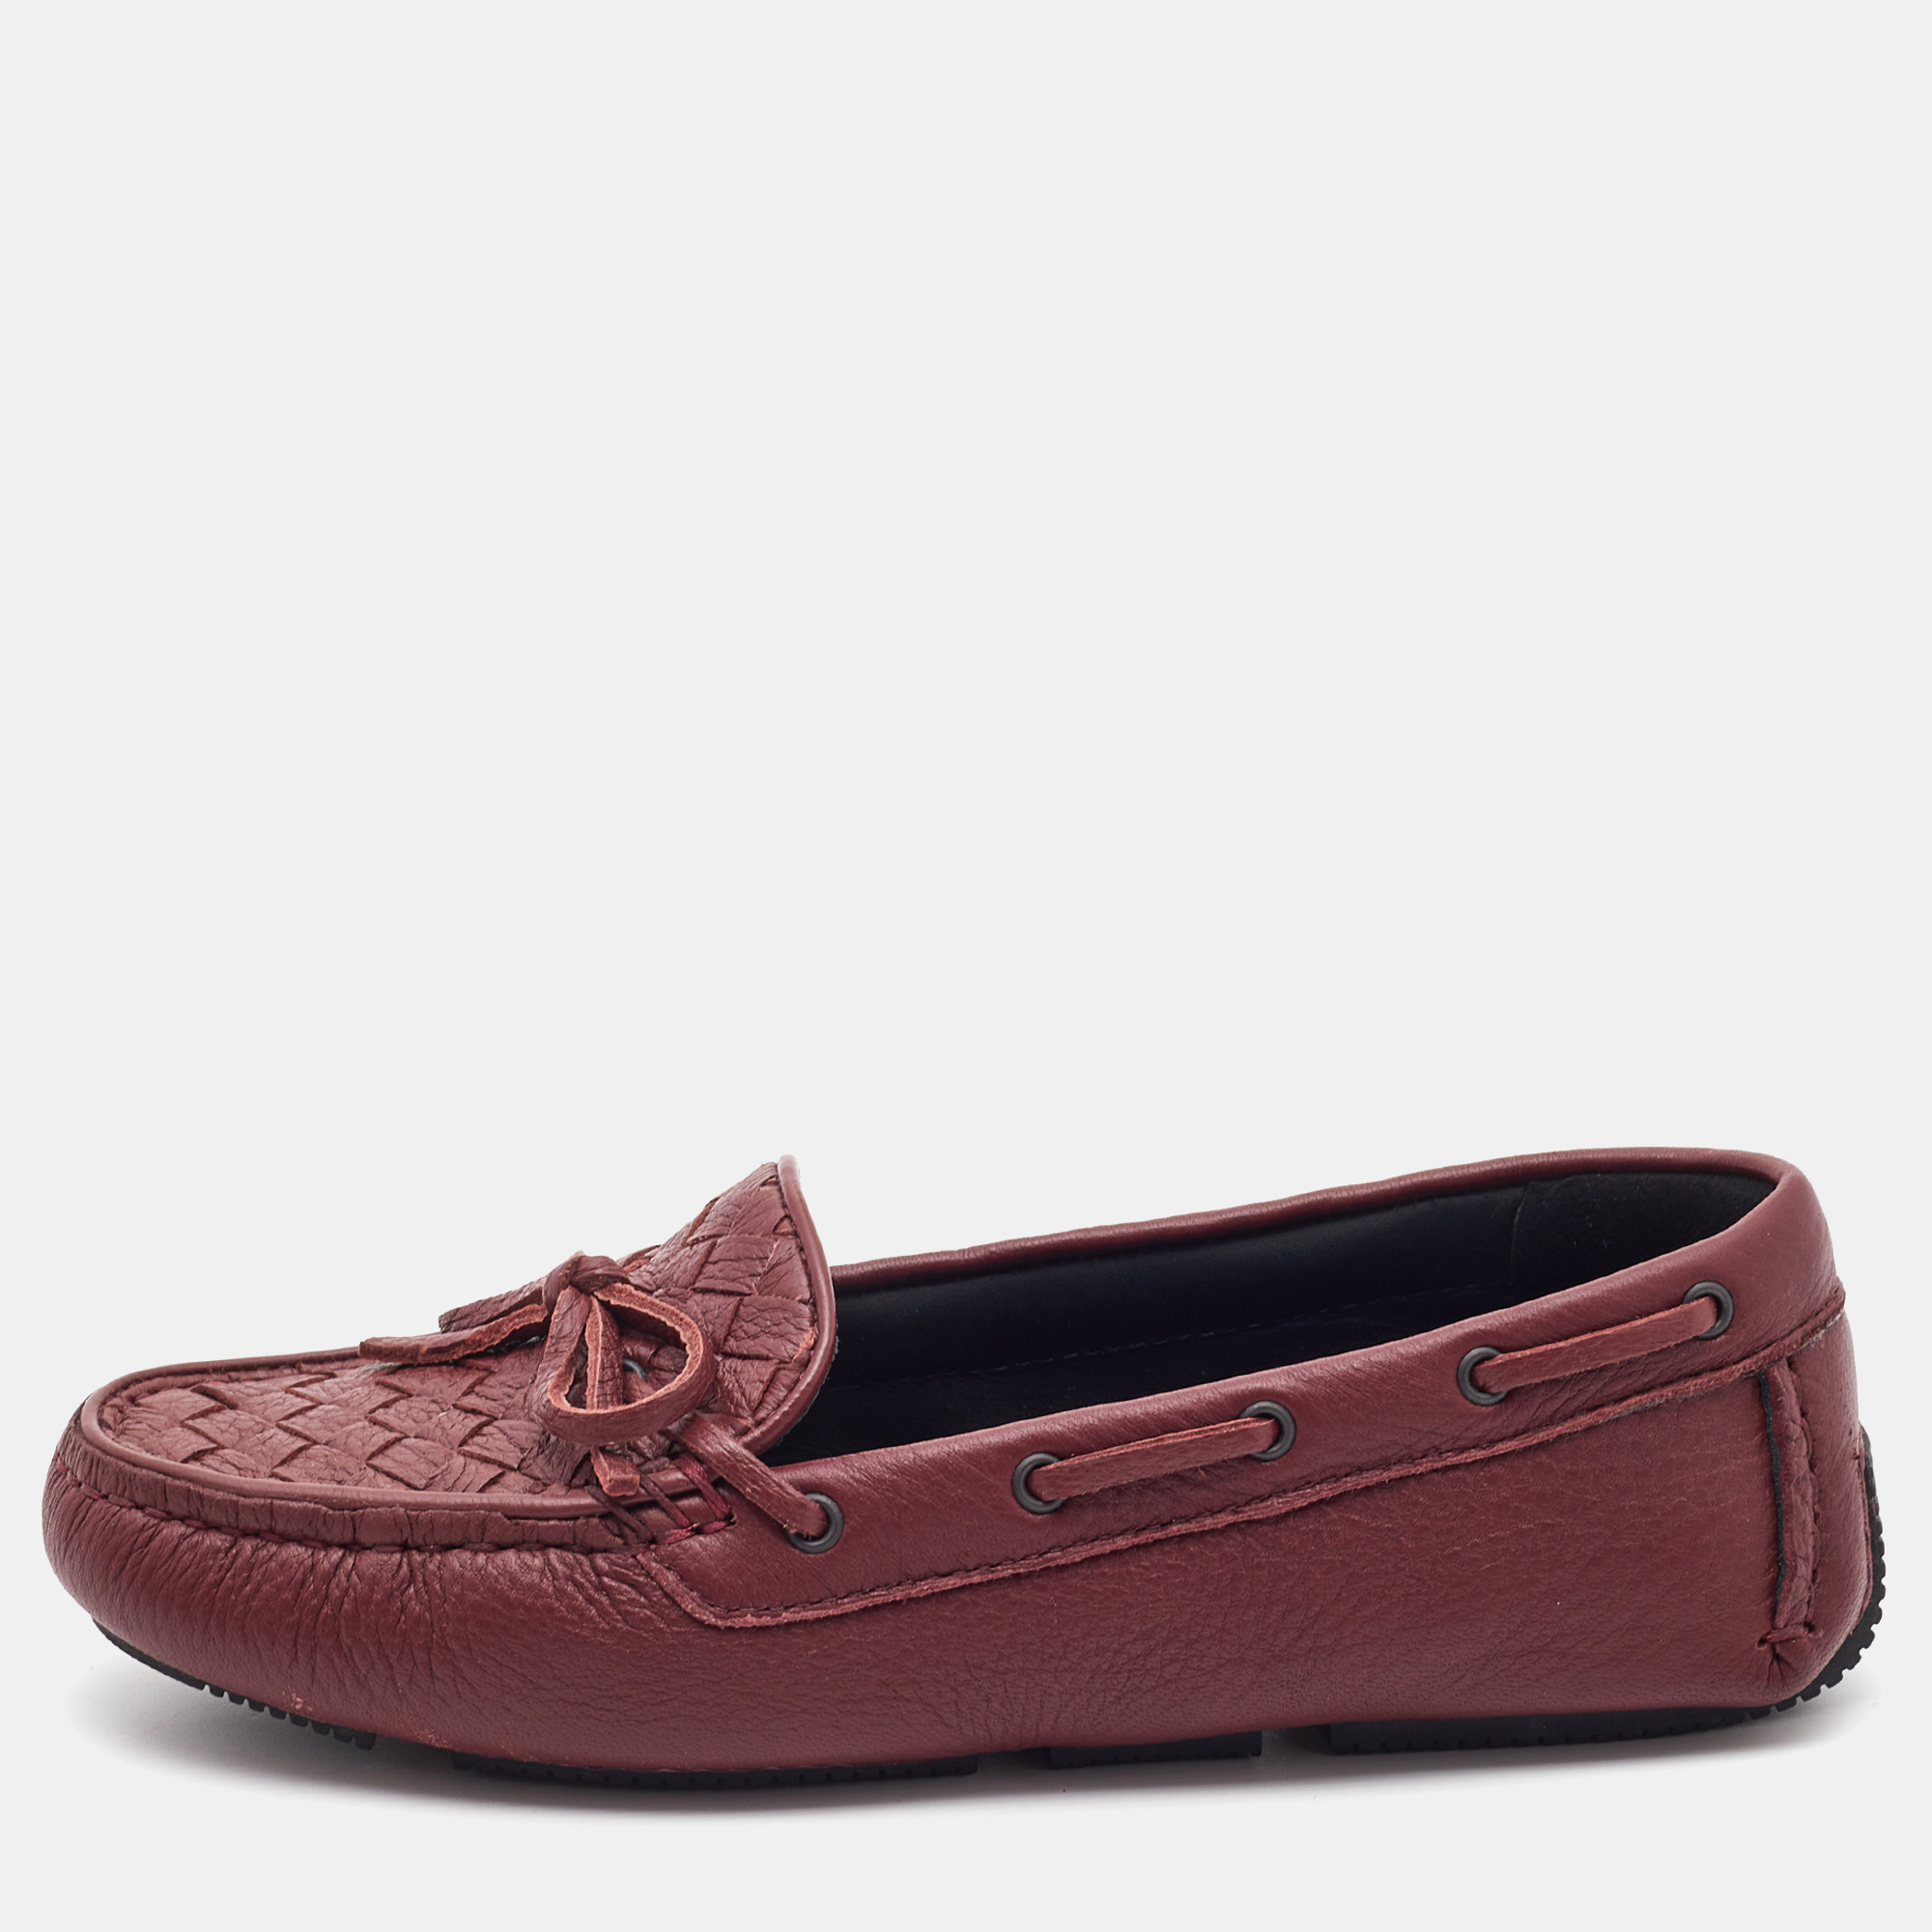 Bottega veneta burgundy leather wave driver loafers size 35